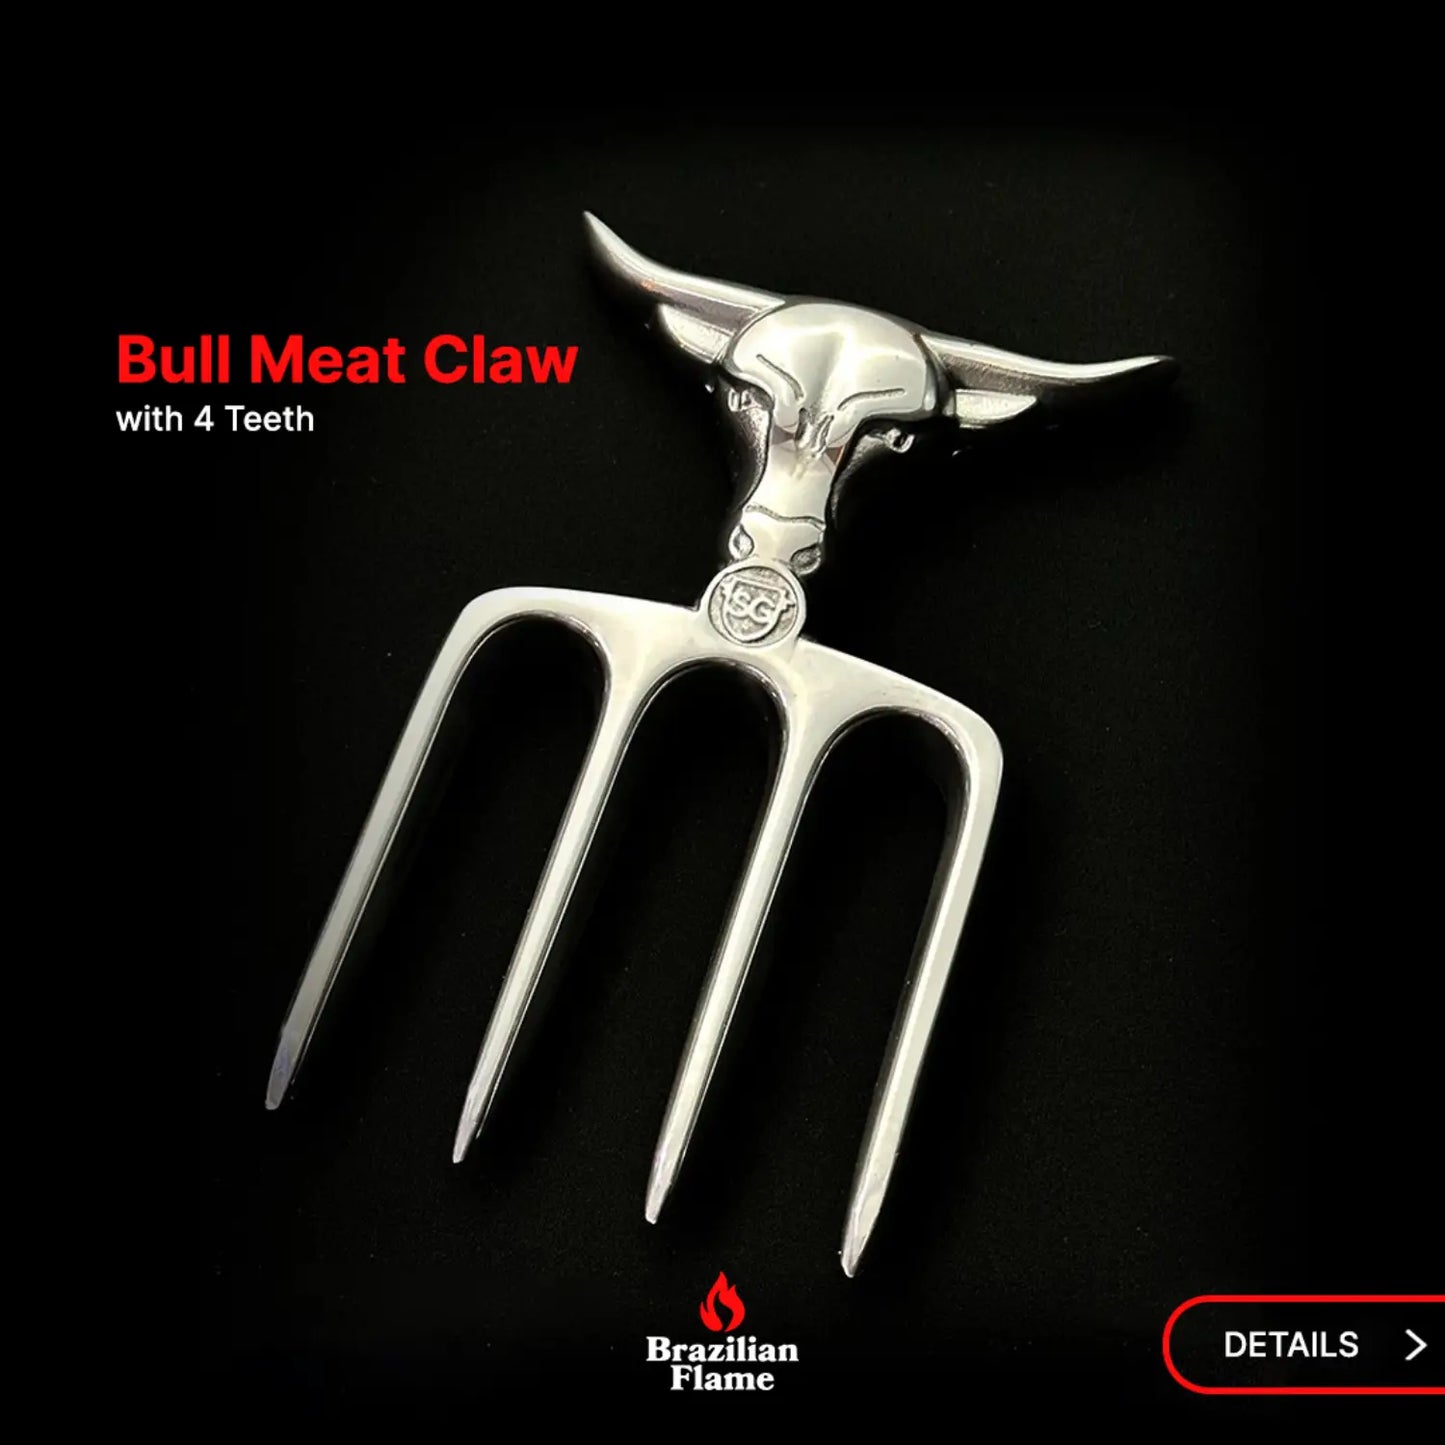 Brazilian Flame Meat Shredder Claw - Bull, 4 Long Teeth Fork - With Leather Sheath